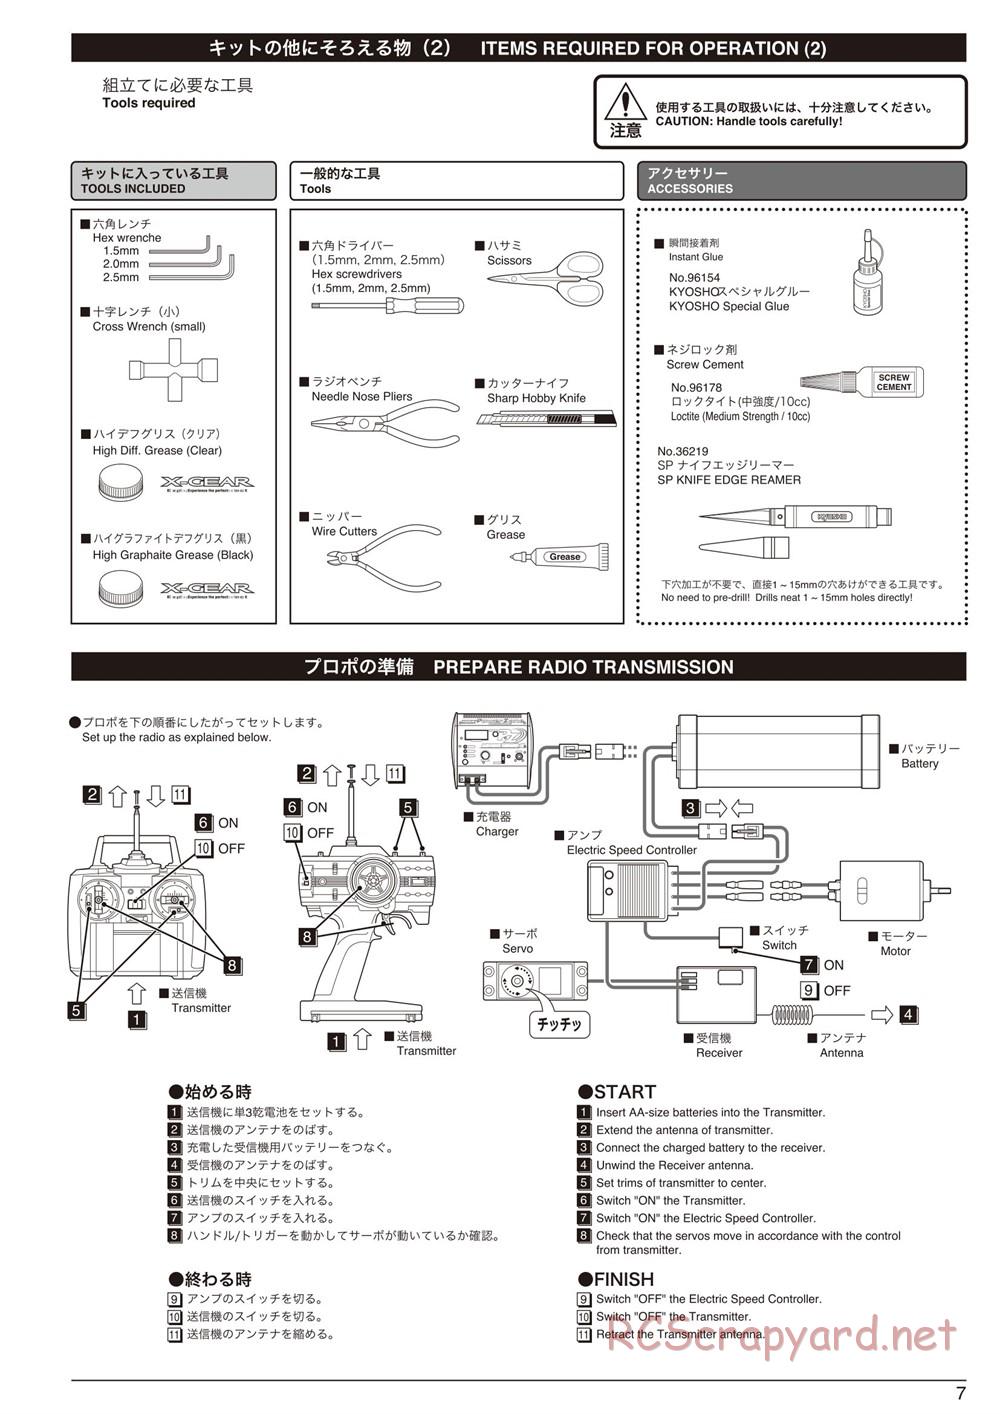 Kyosho - Ultima RT6 - Manual - Page 7